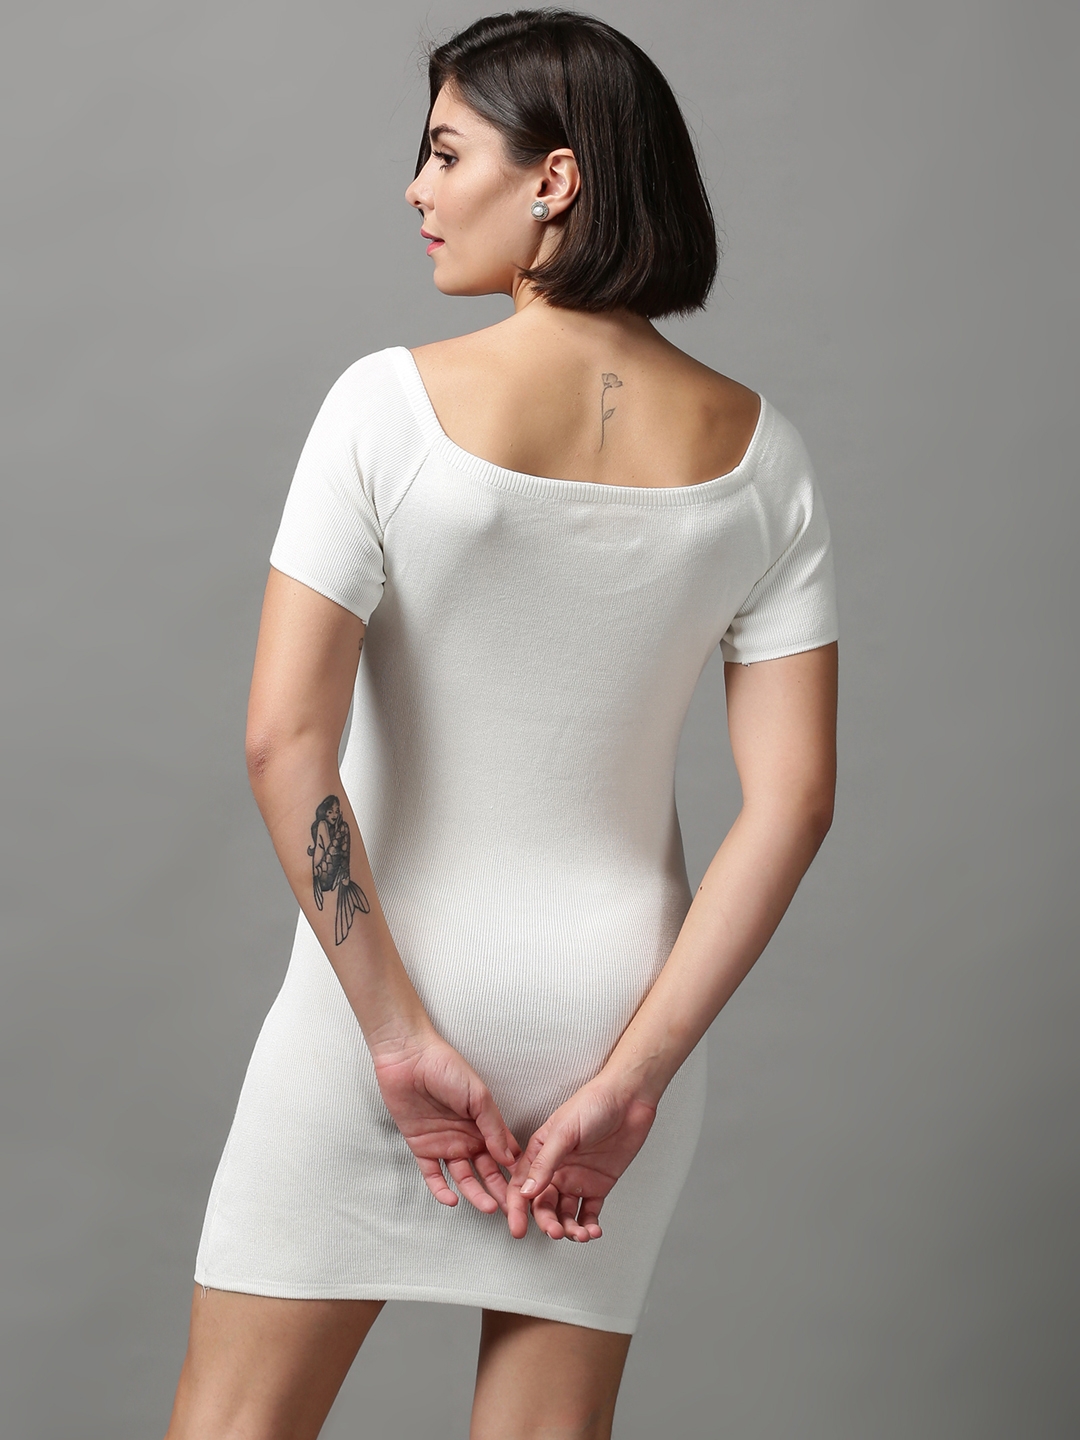 Women's White Acrylic Solid Dresses